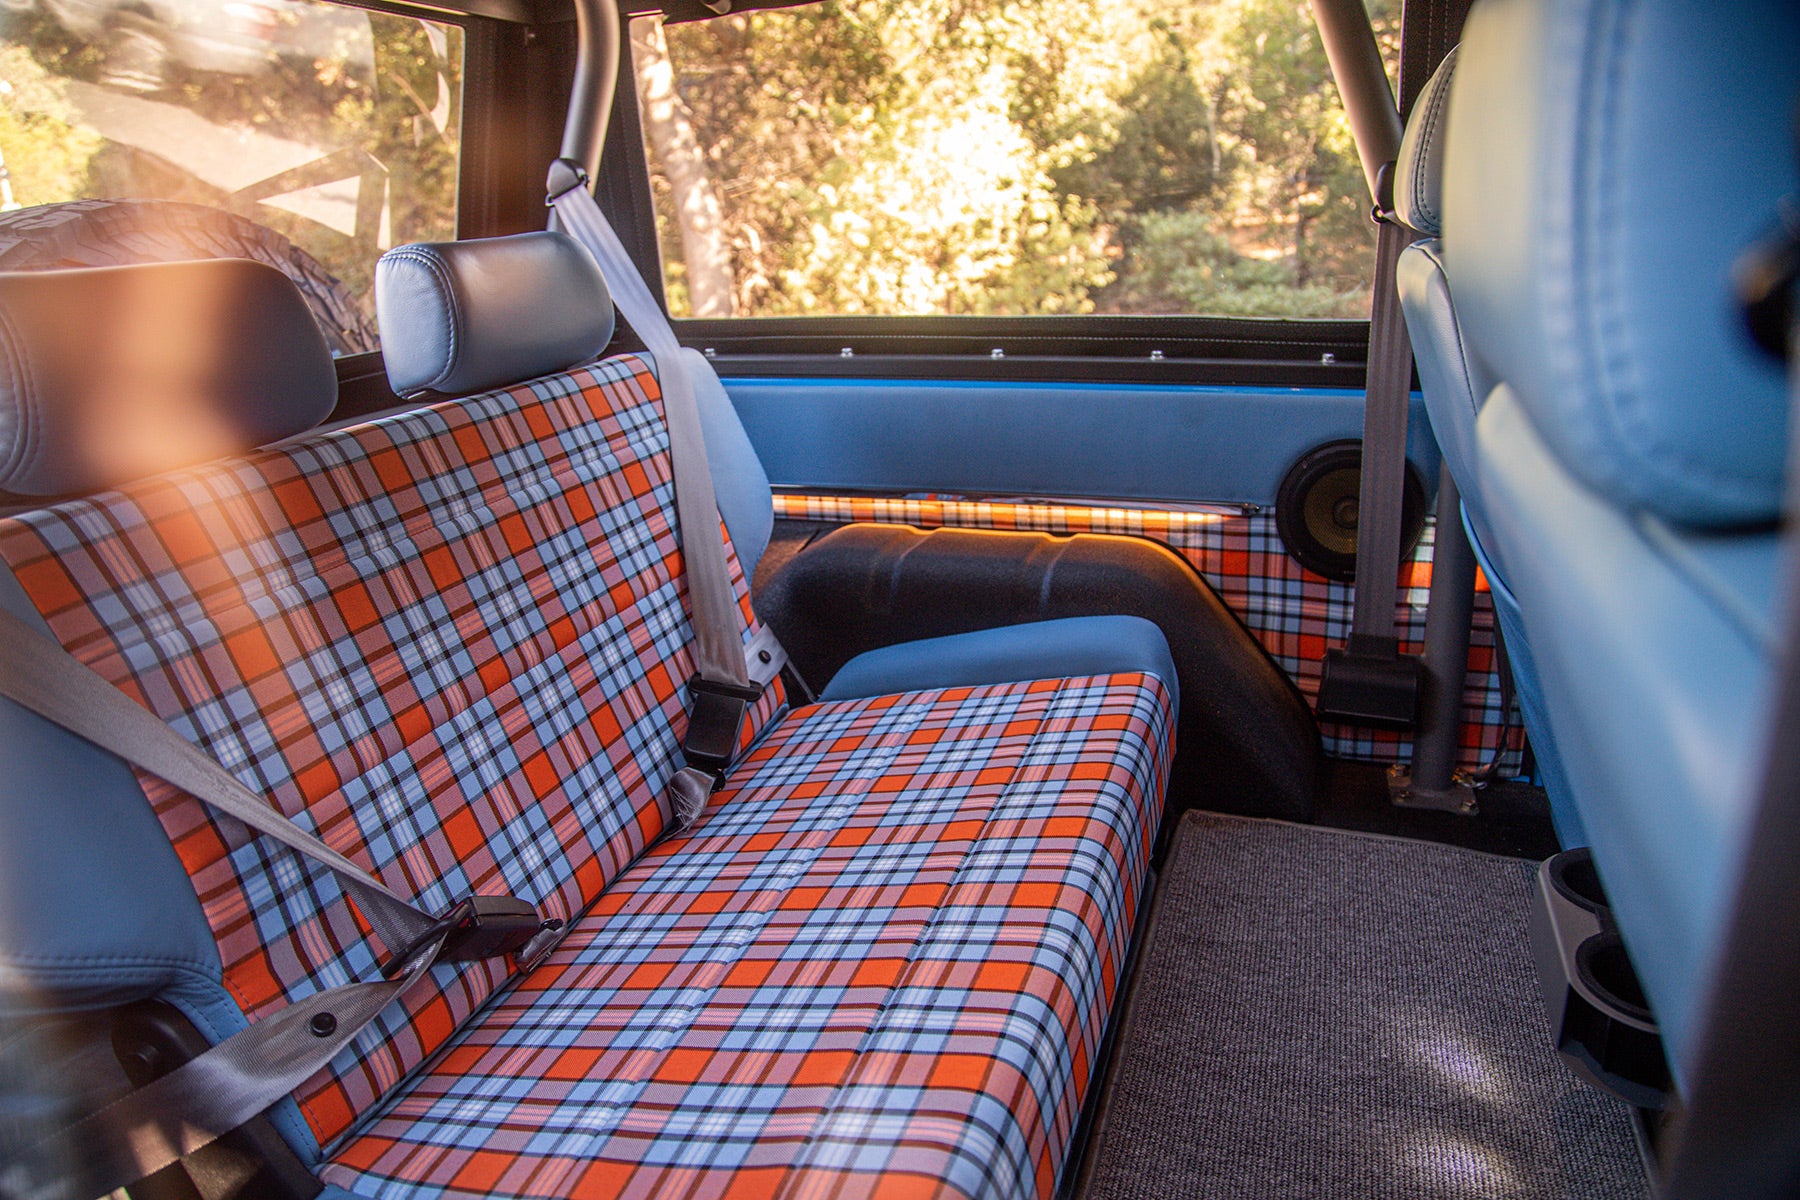 Spirit of le mans plaid tartan fabric cloth bronco interior rear bench seat